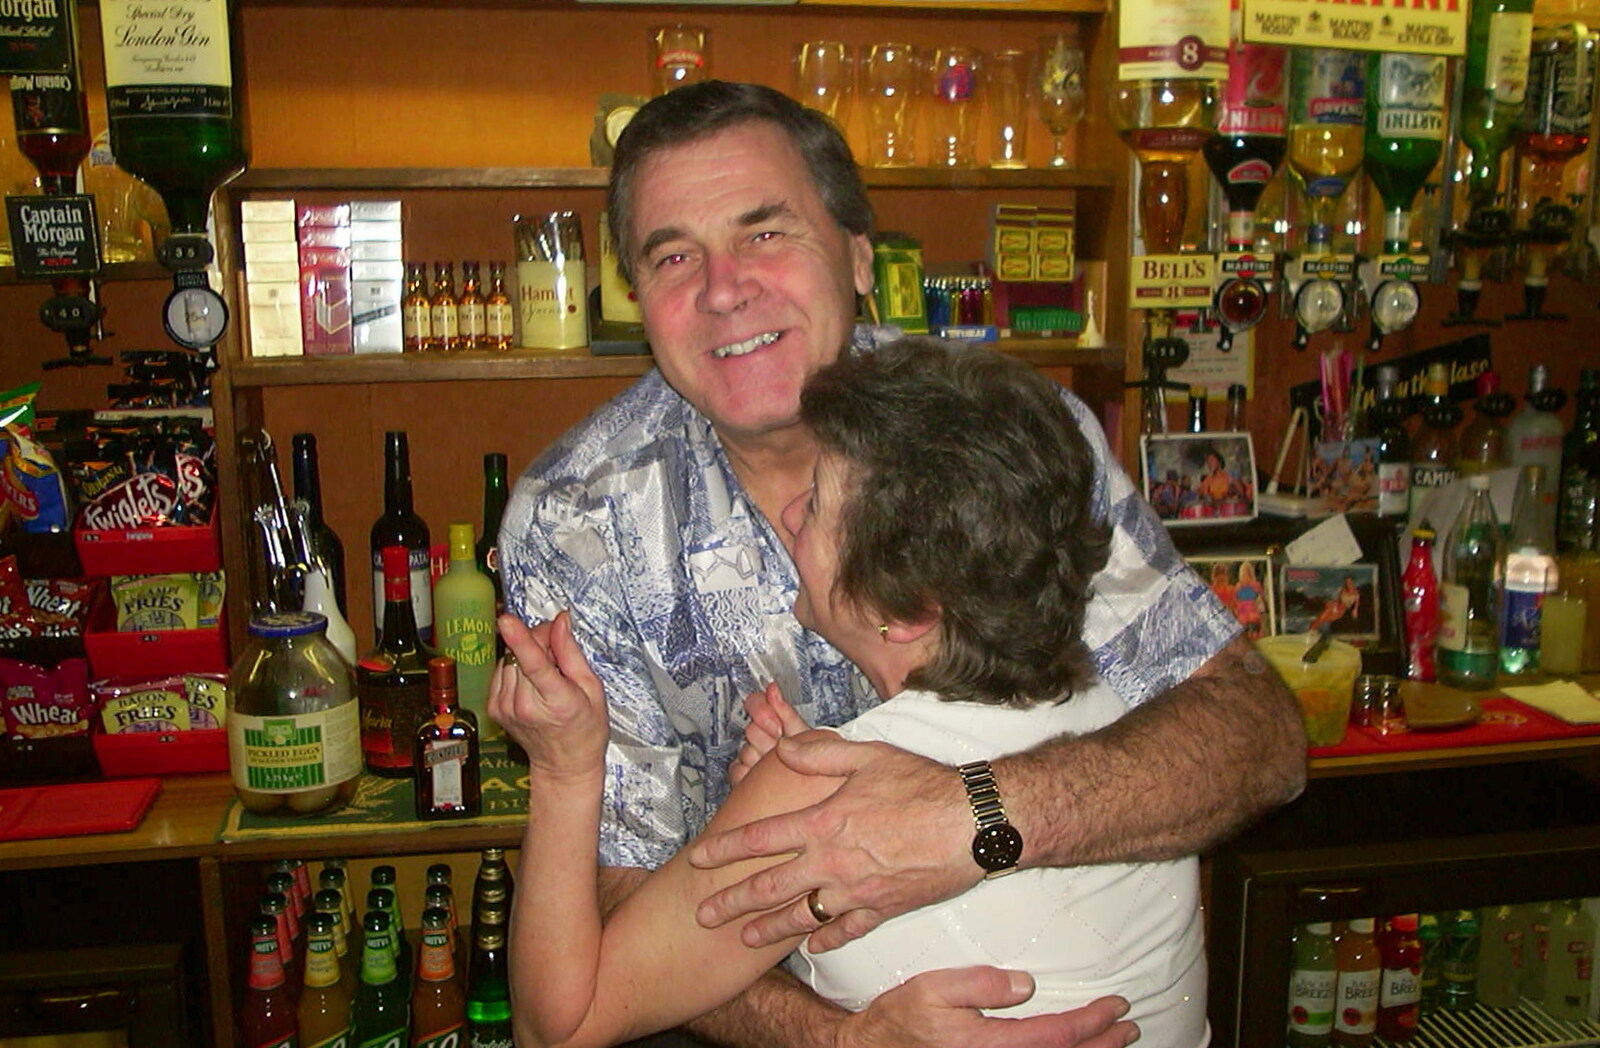 New Year's Eve at the Swan Inn, Brome, Suffolk - 31st December 2002: Alan gives Sylvia a hug